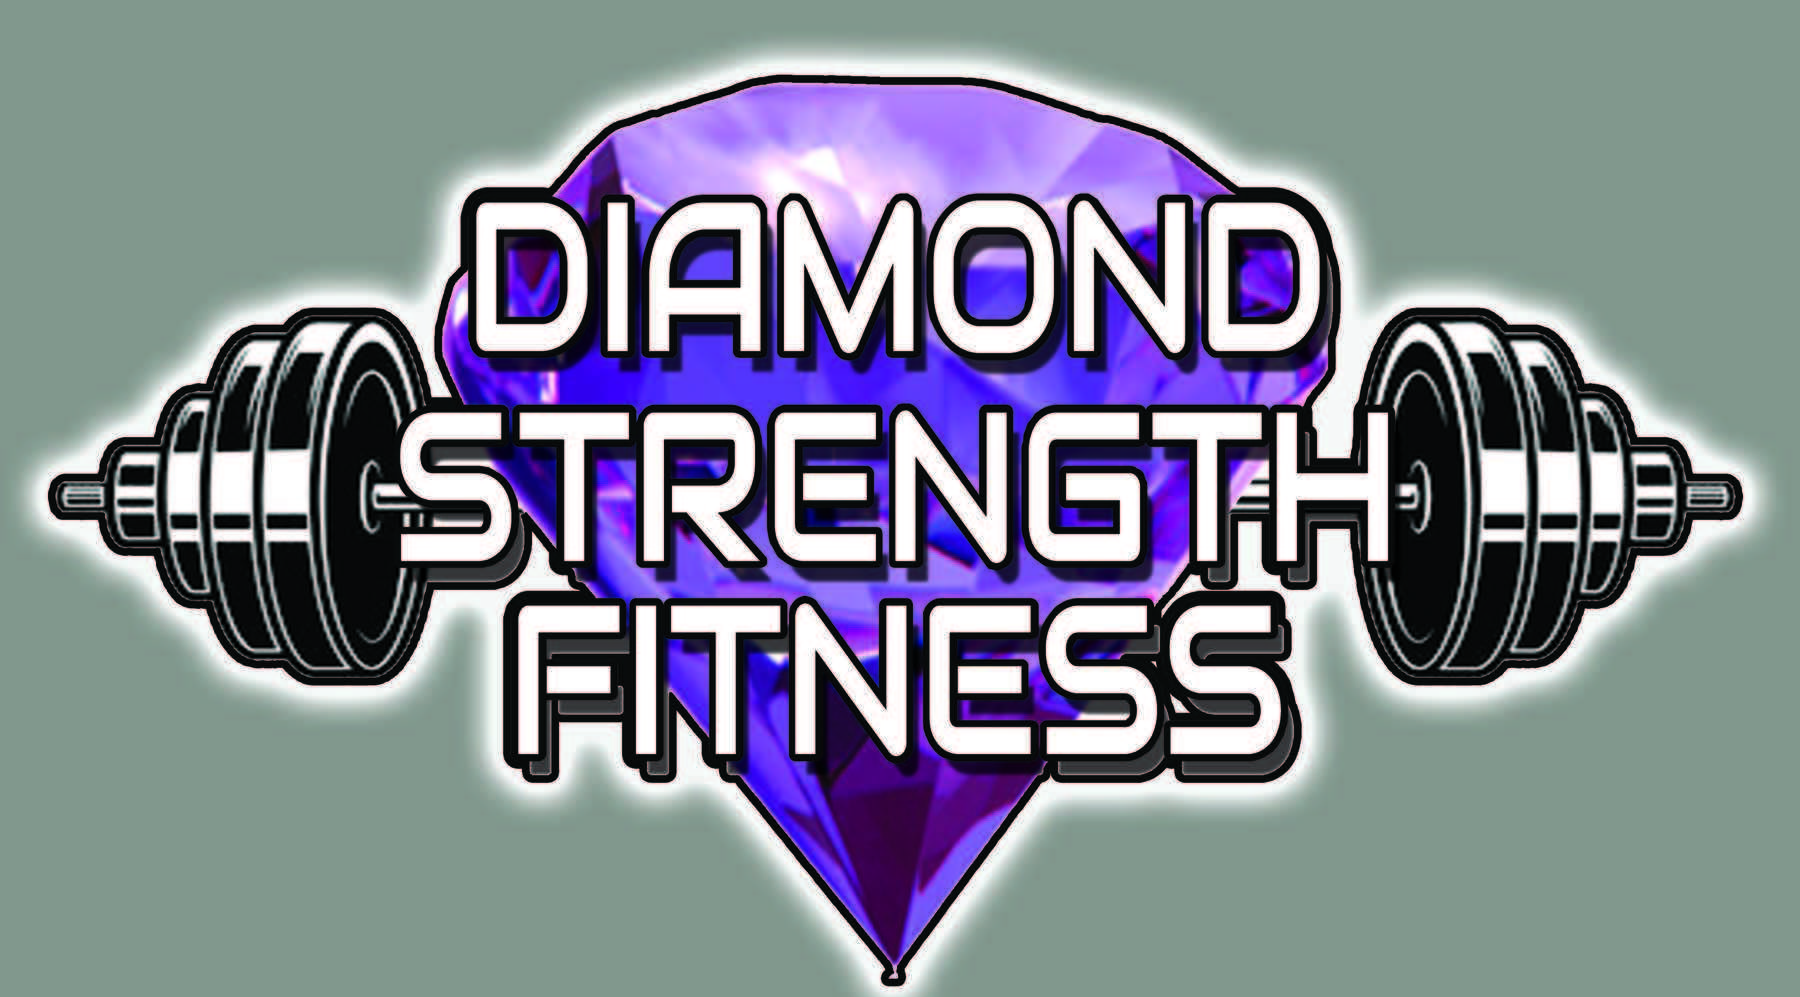 Diamond Strenght Fitness